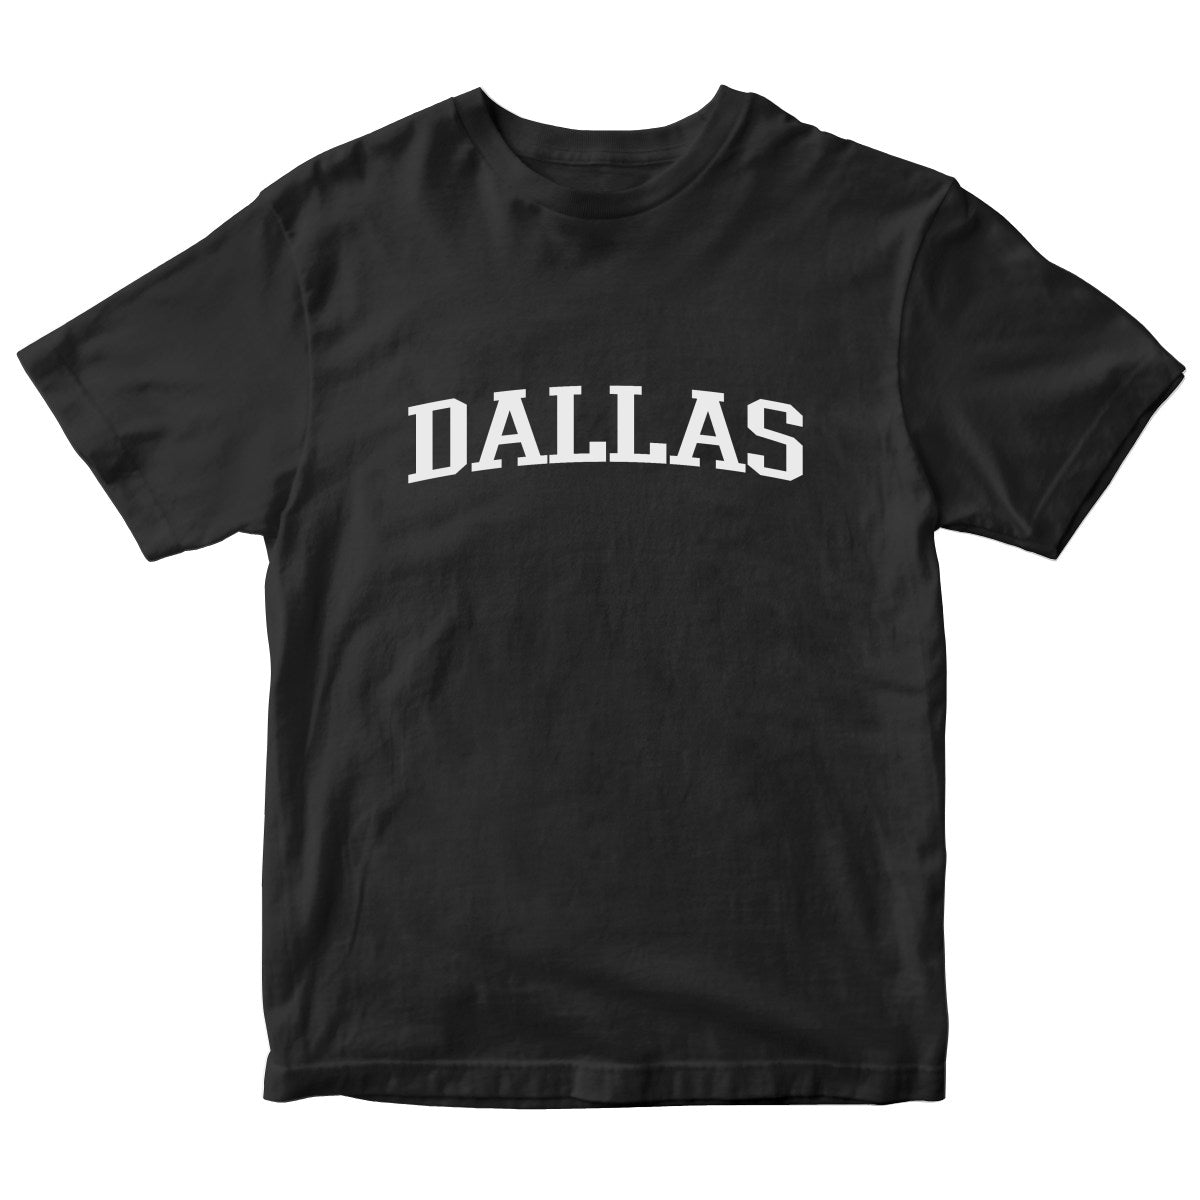 Dallas Kids T-shirt